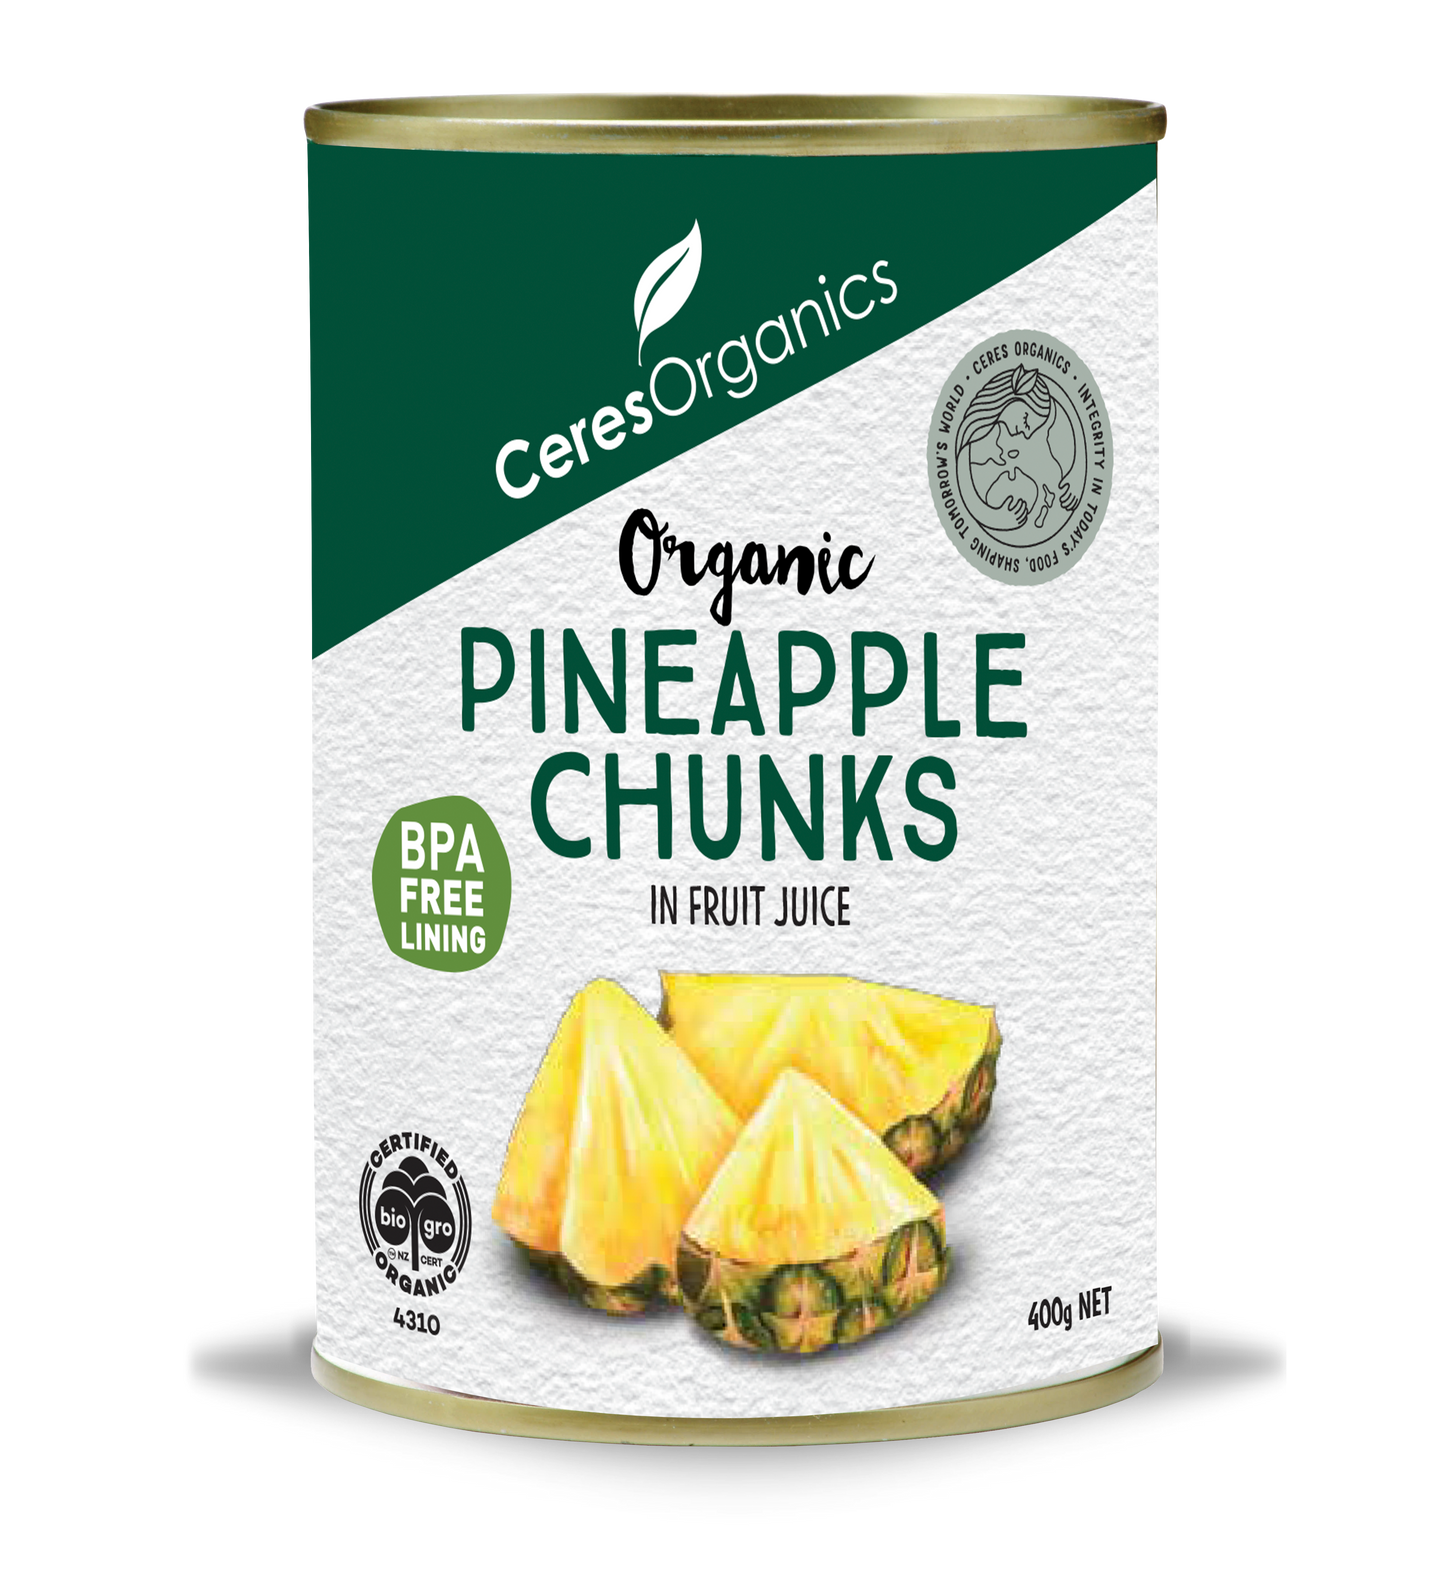 Organic Pineapple Chunks in Fruit Juice - 400g